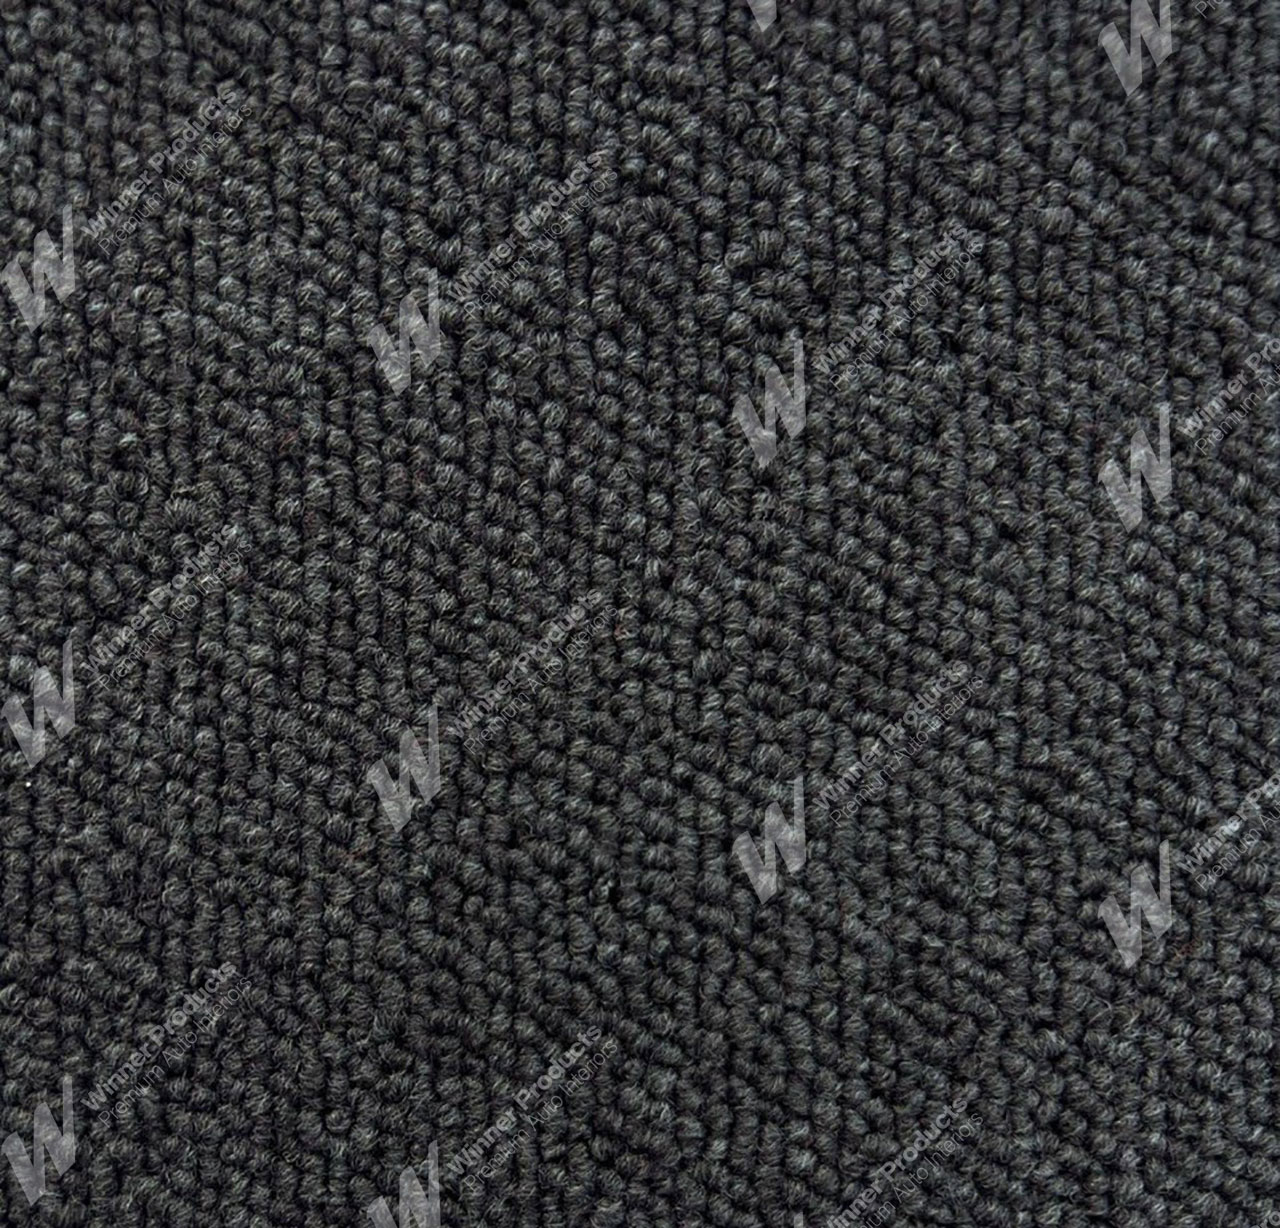 Holden Premier HQ Premier Wagon Mar73-74 35R Ash Carpet (Image 1 of 1)